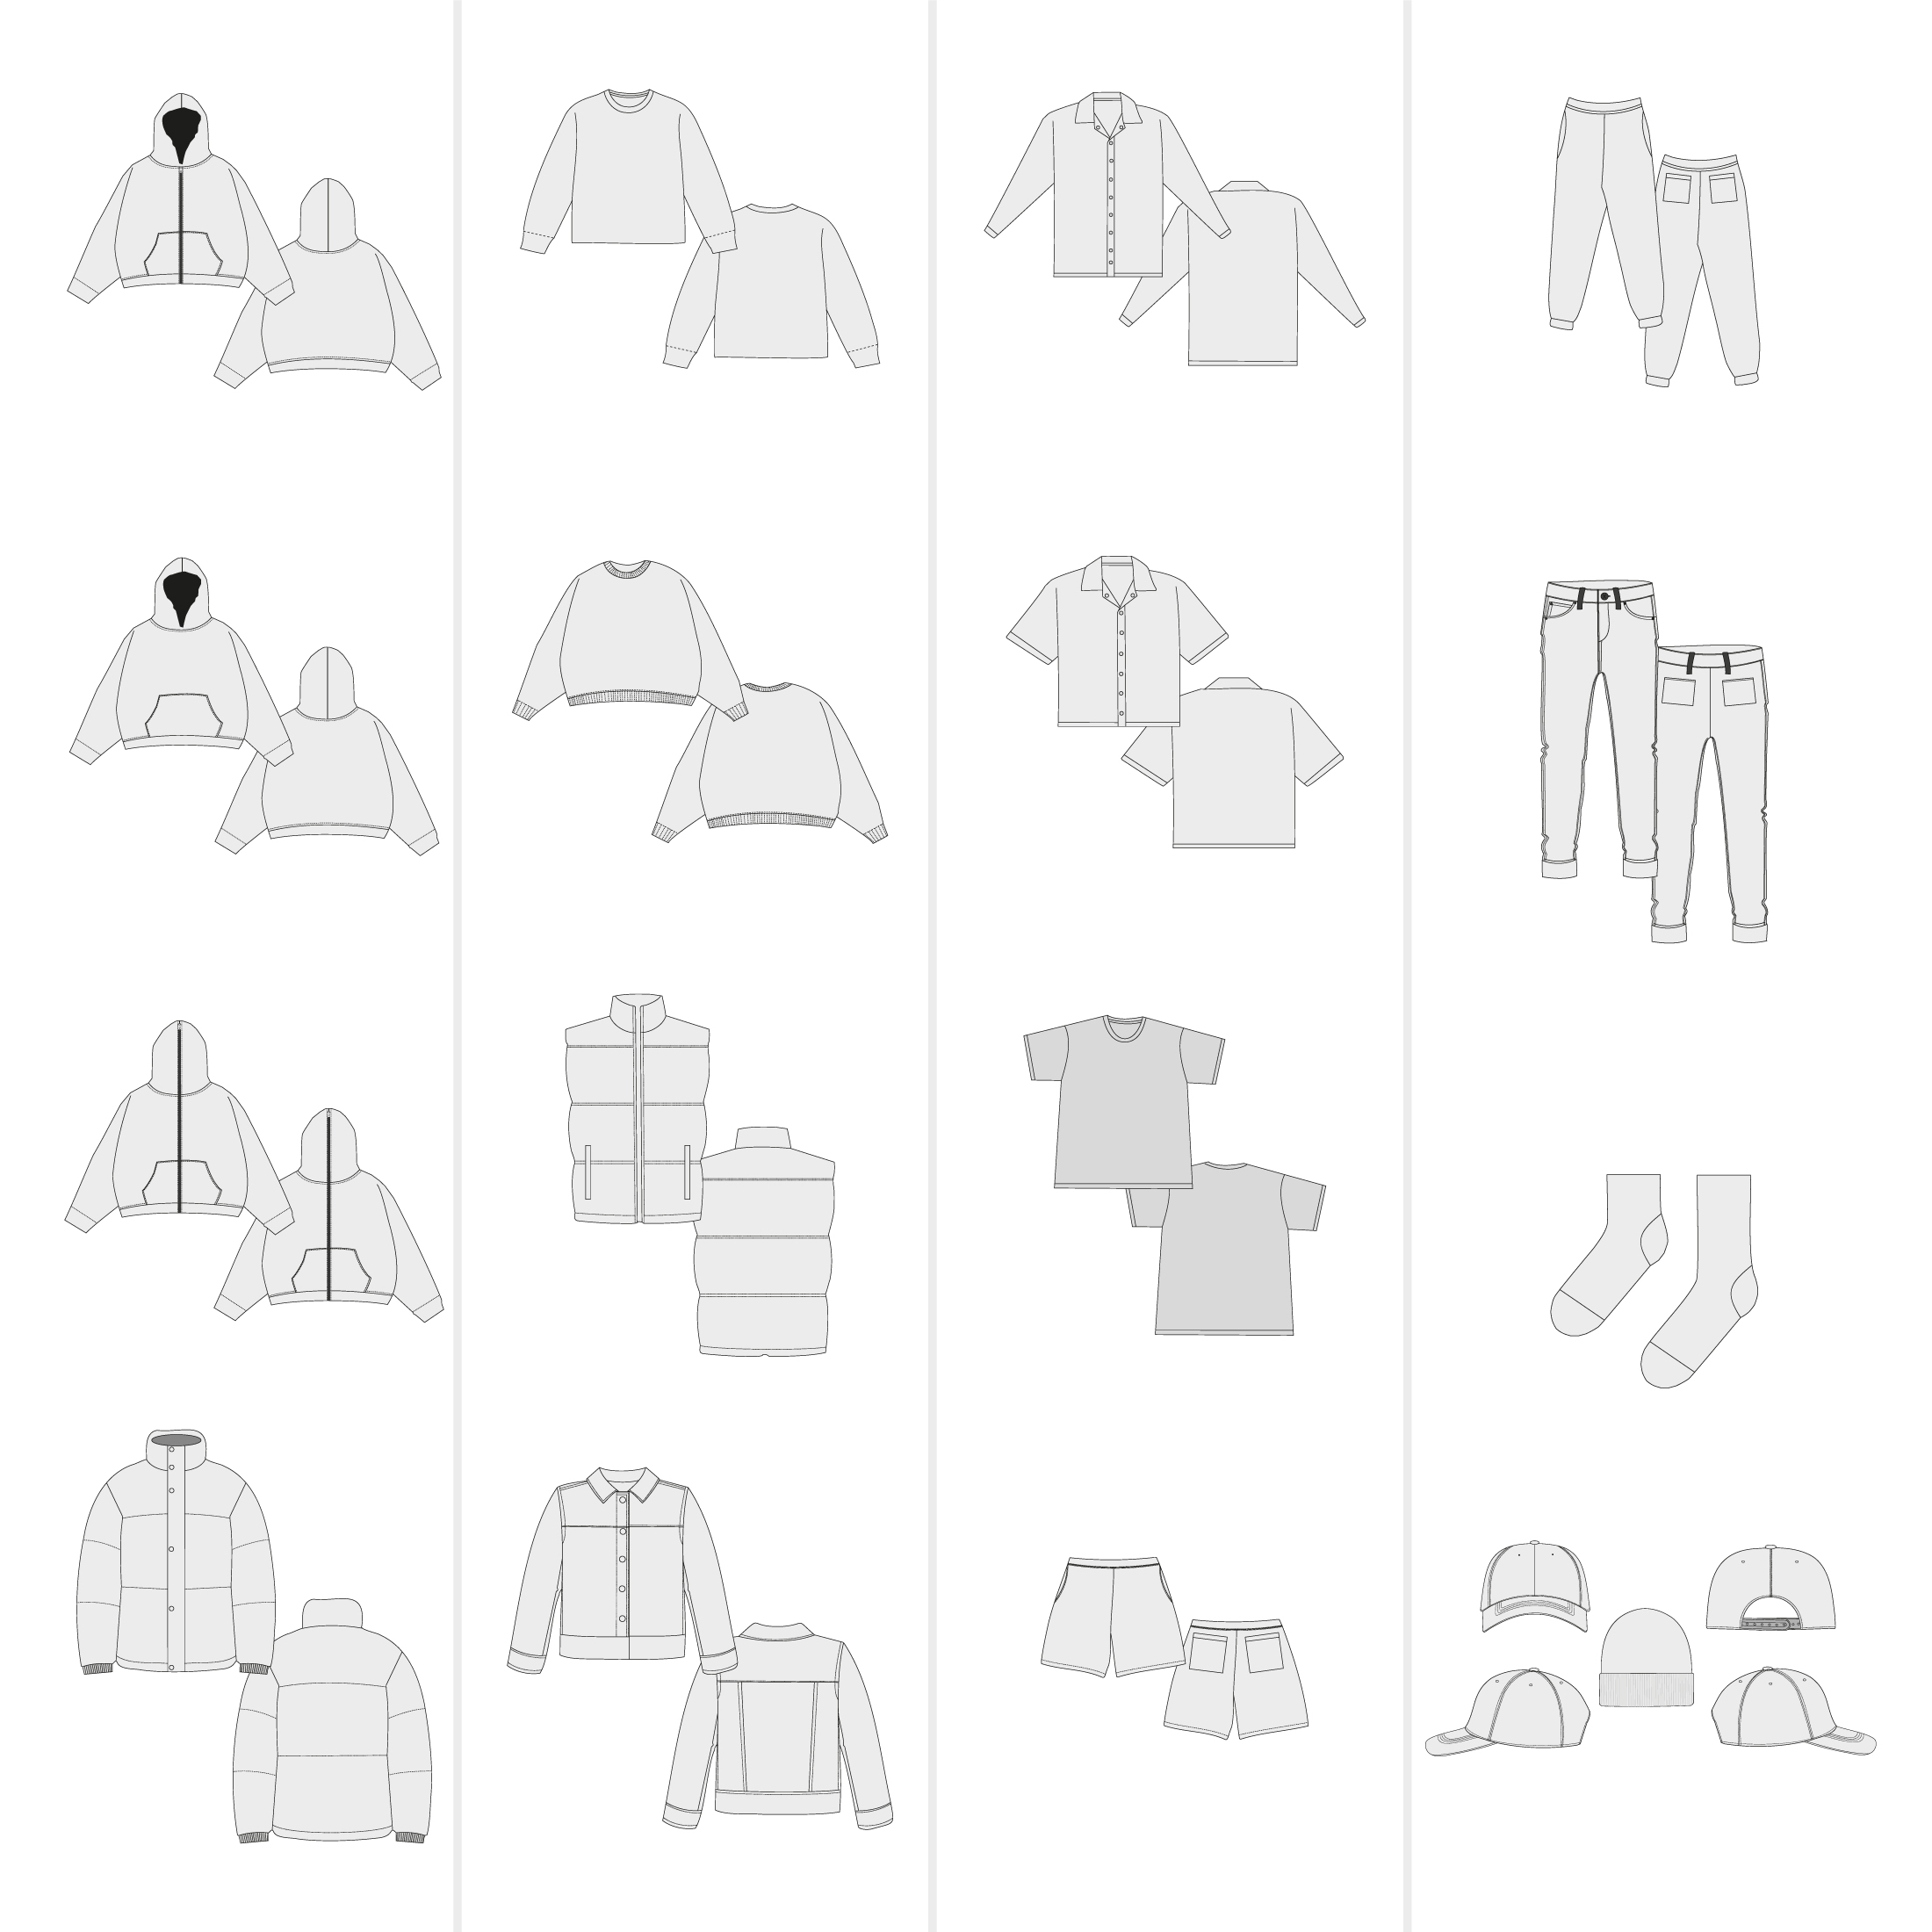 Apparel Vector Mockup Bundle - Fashion Flat Sketch by S.i.